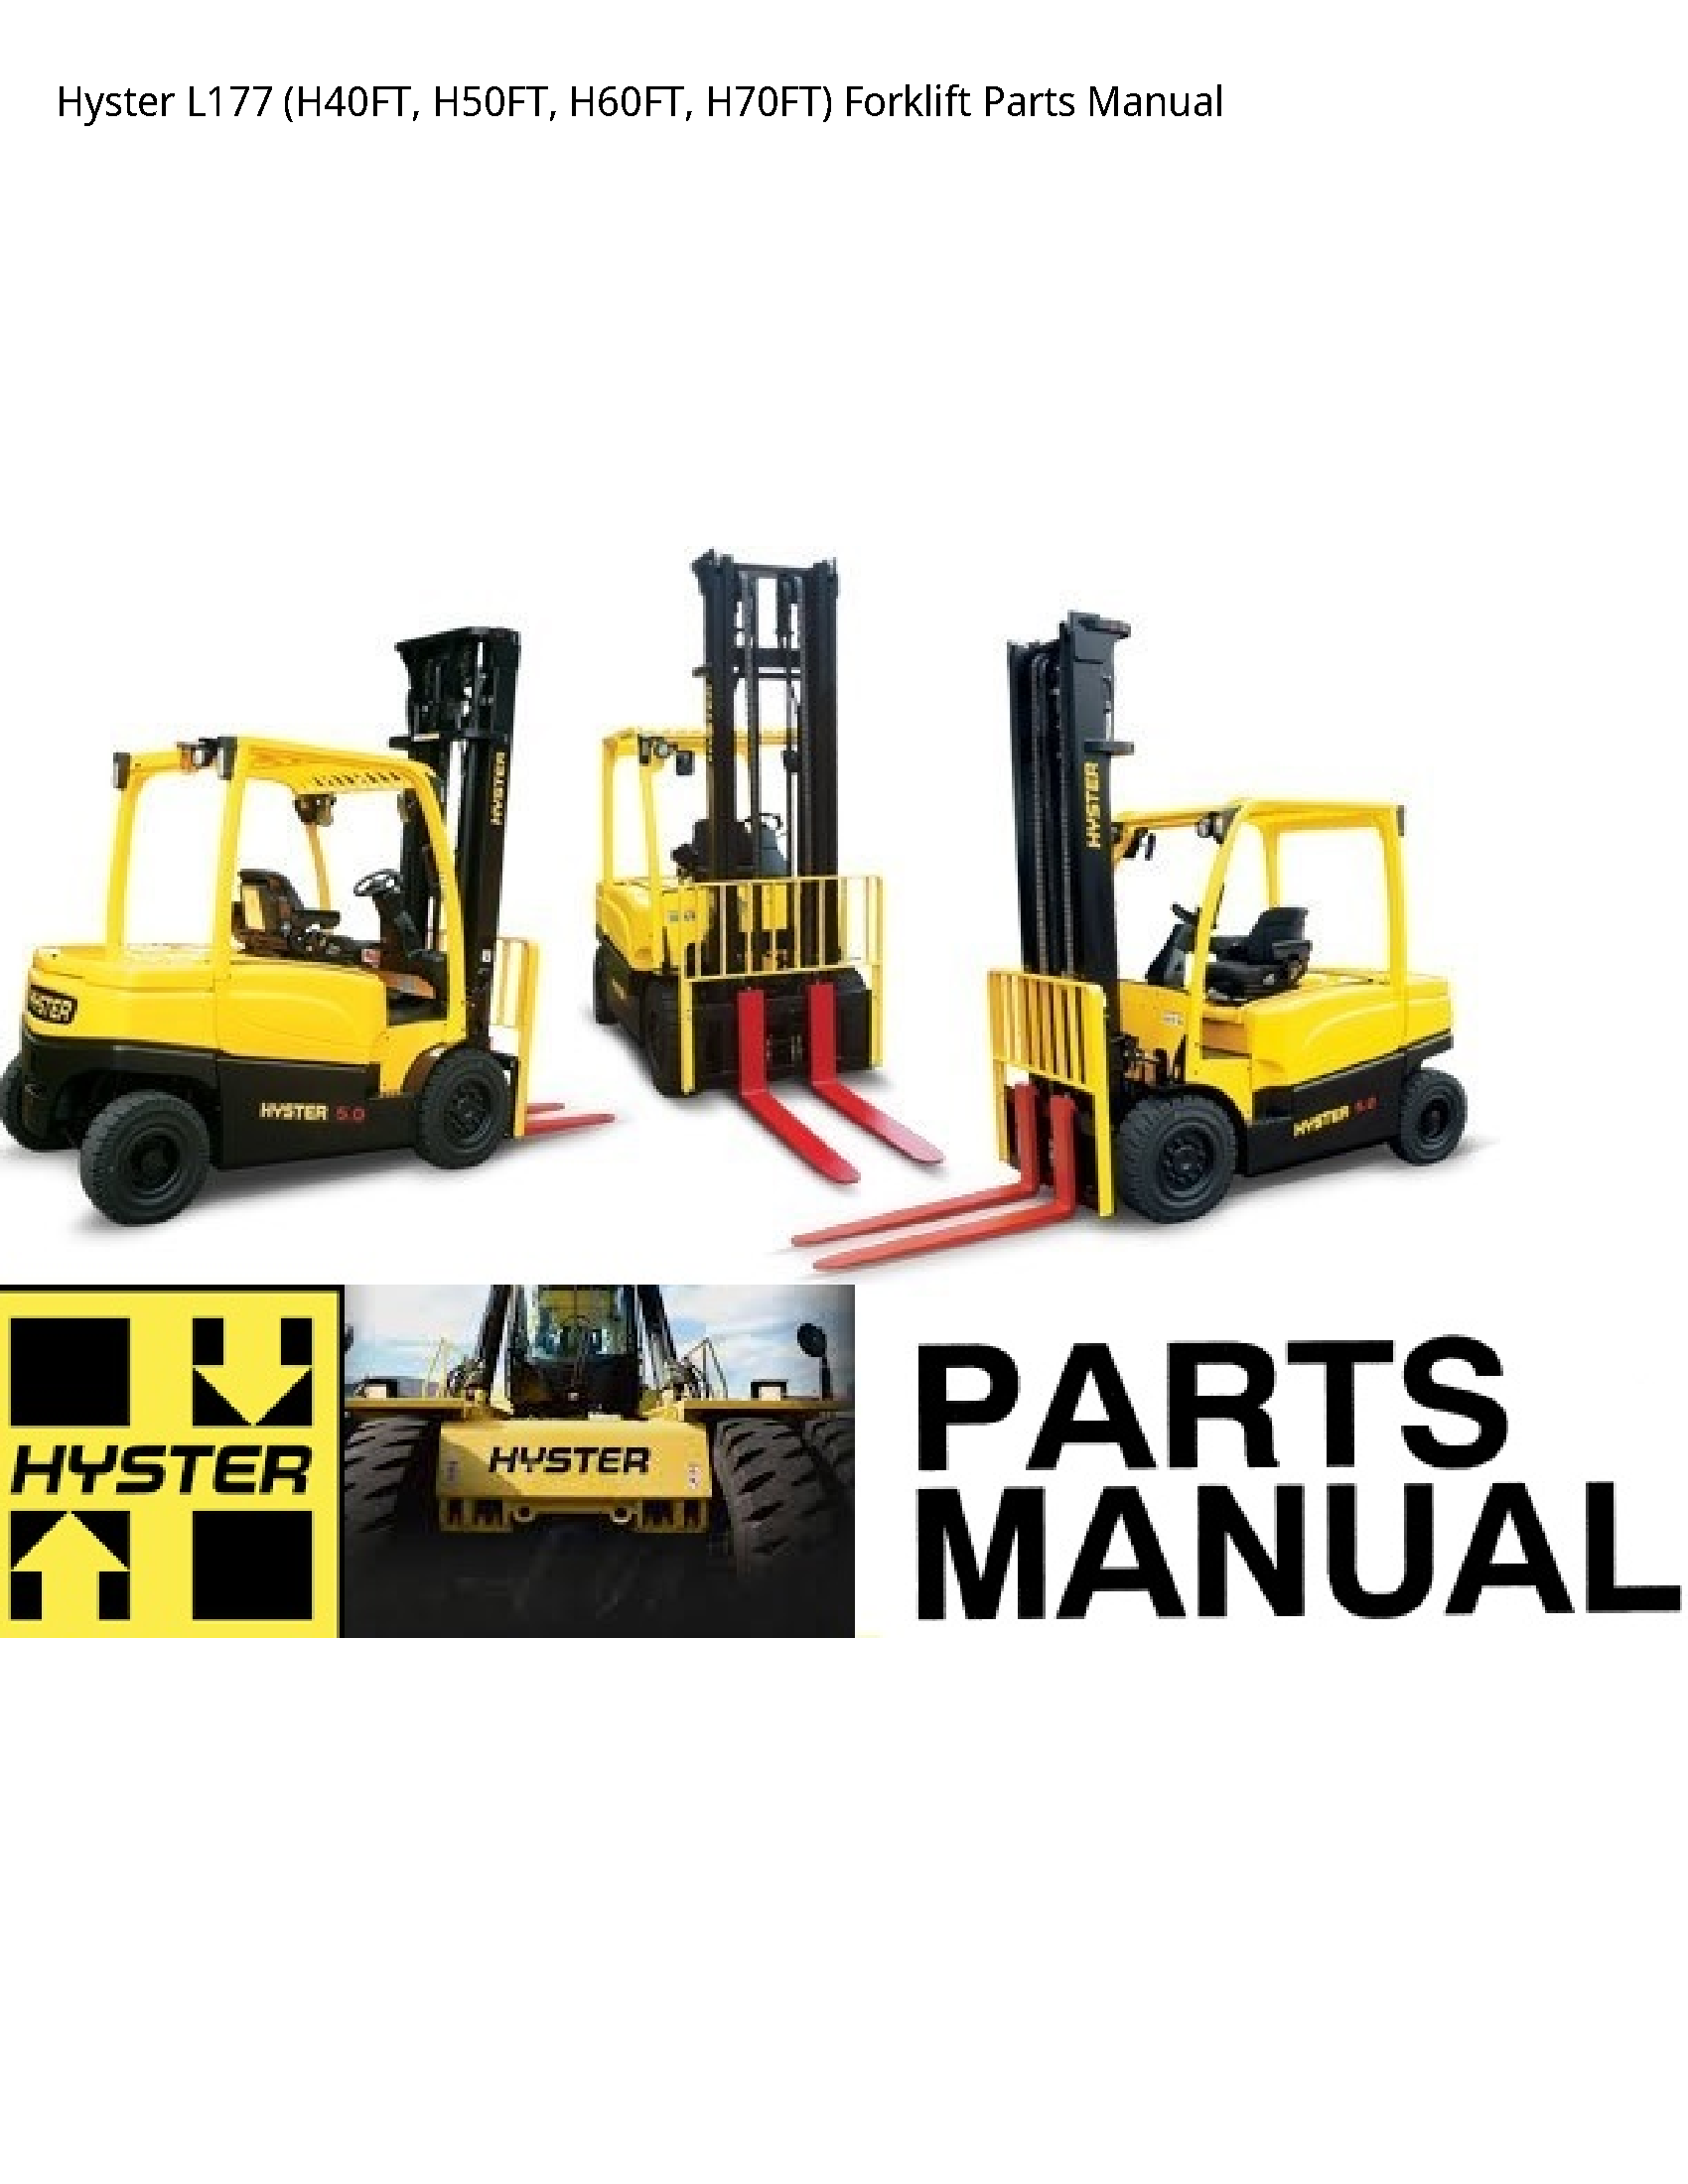 Hyster L177 Forklift Parts manual